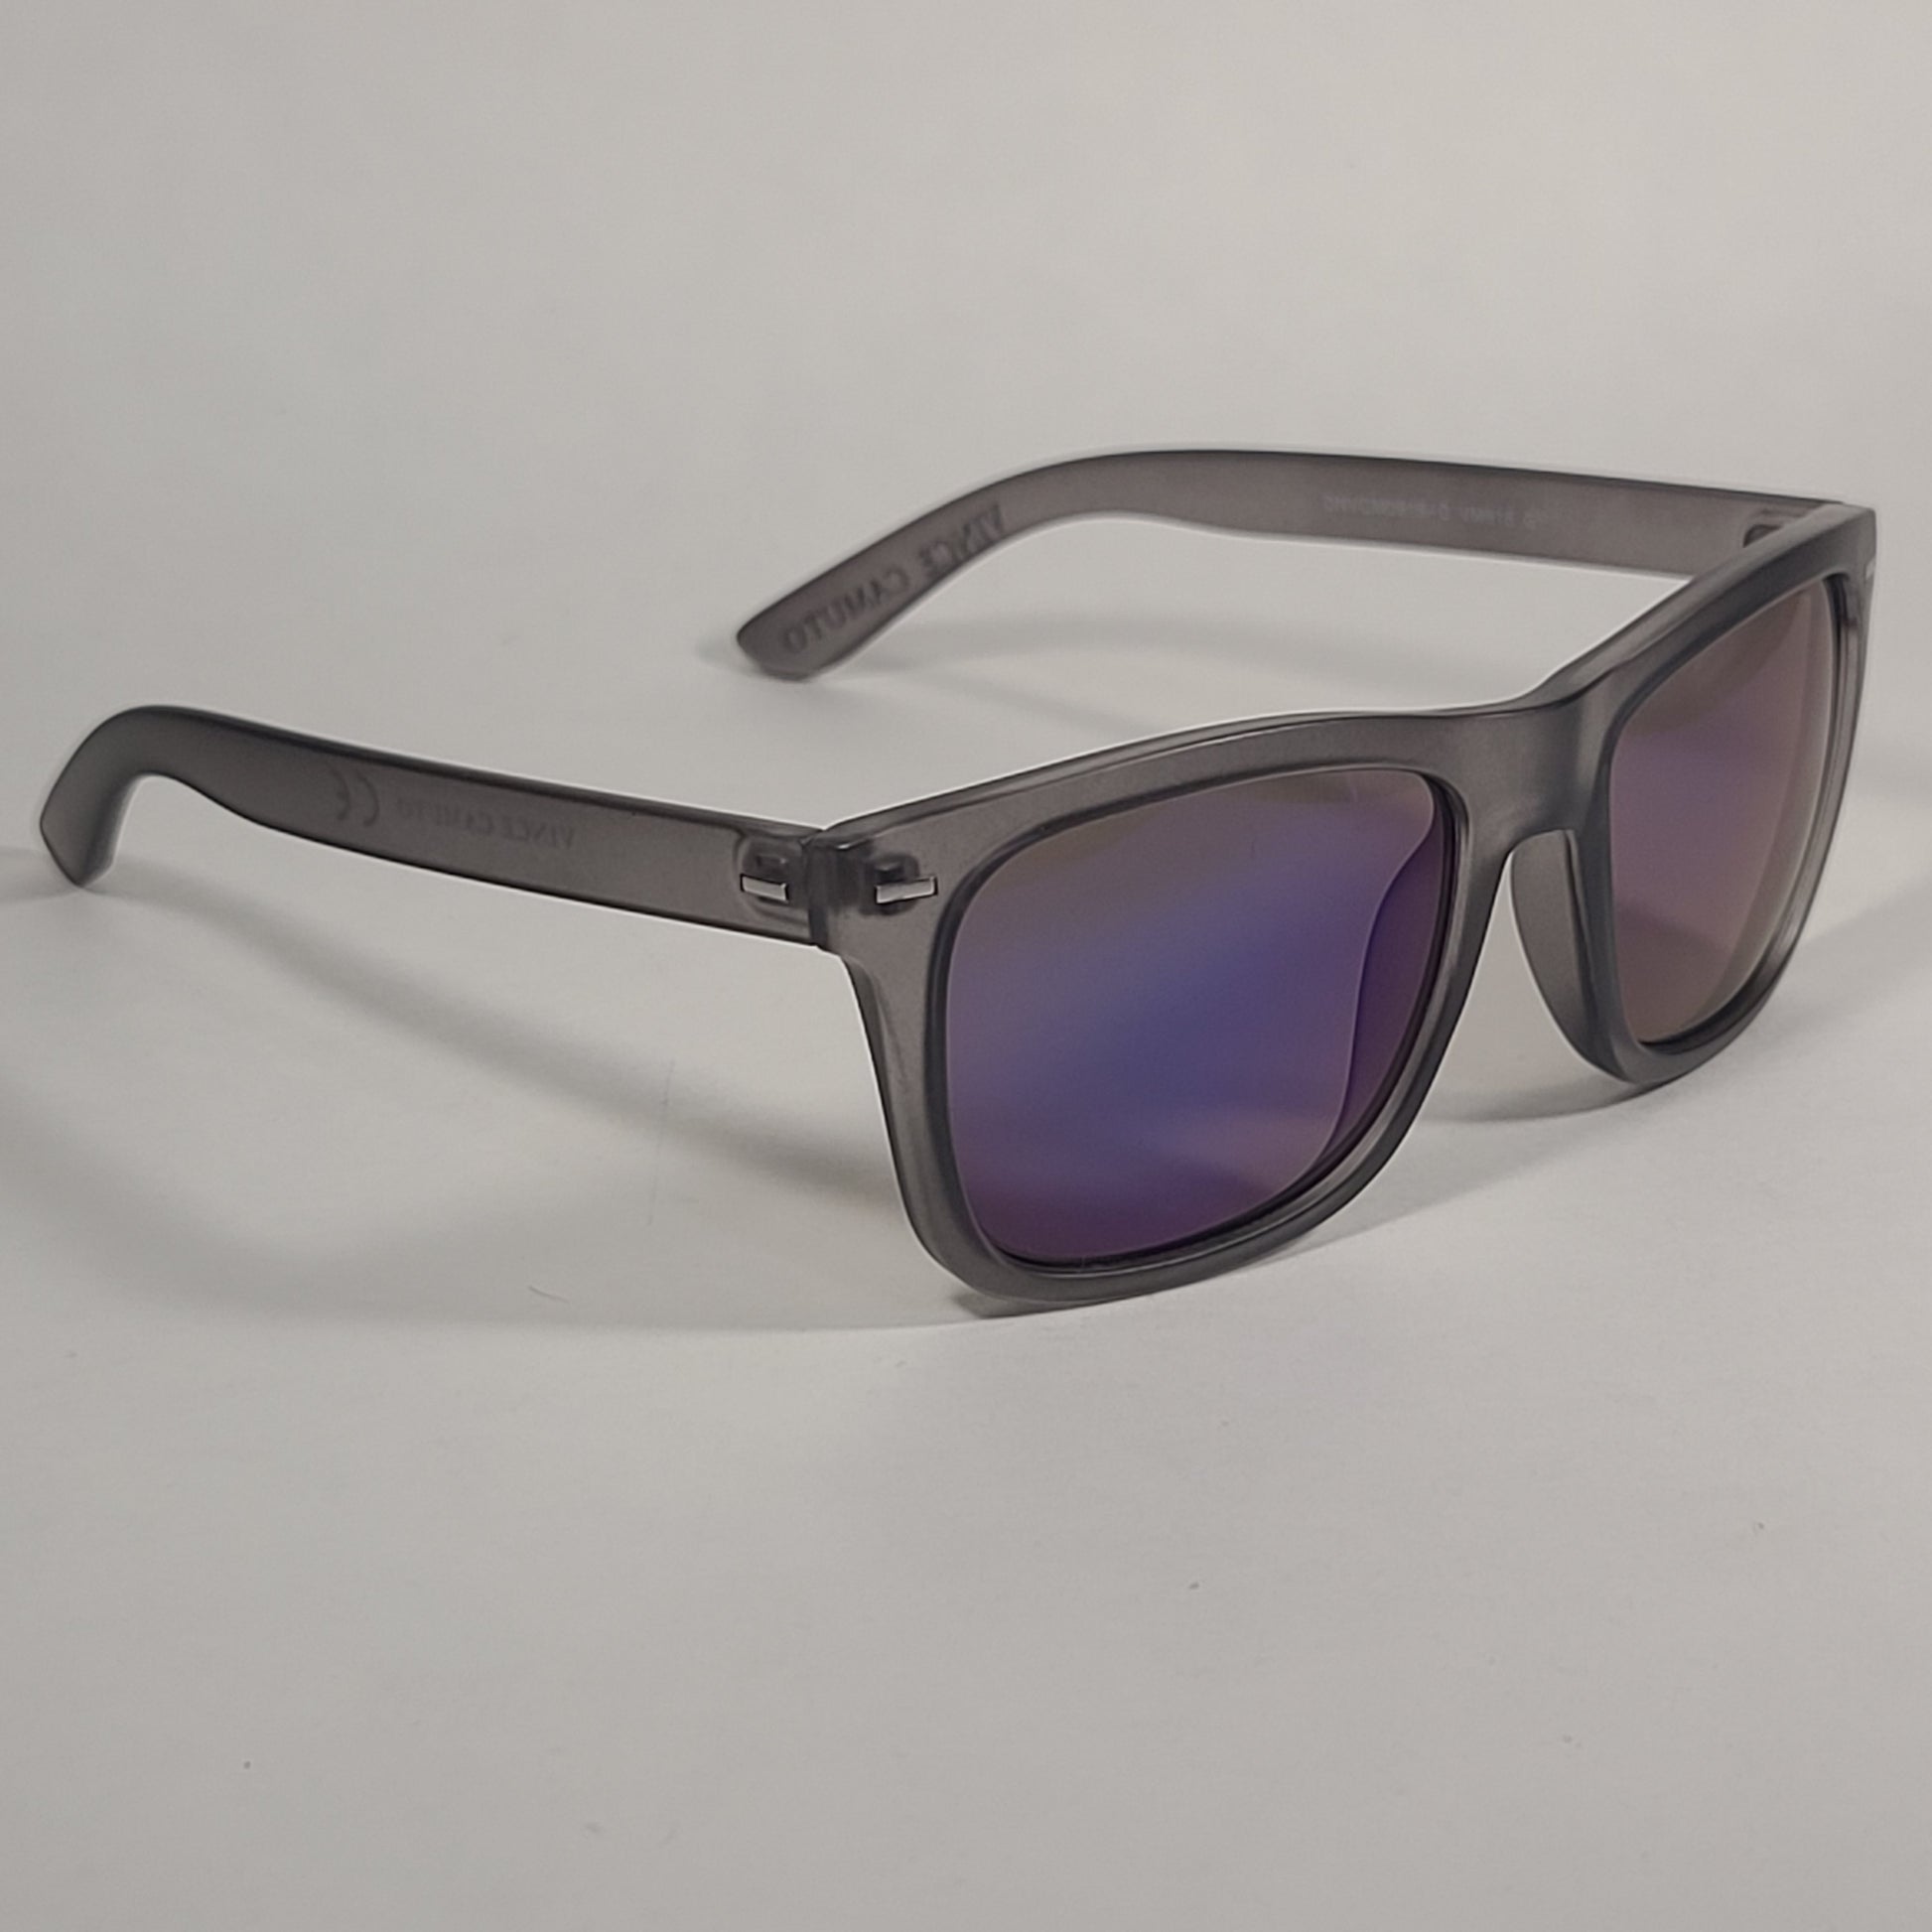 Vince Camuto Square Sunglasses Matte Gray Crystal Frame Blue / Violet Flash Lens VM615 GY - Sunglasses